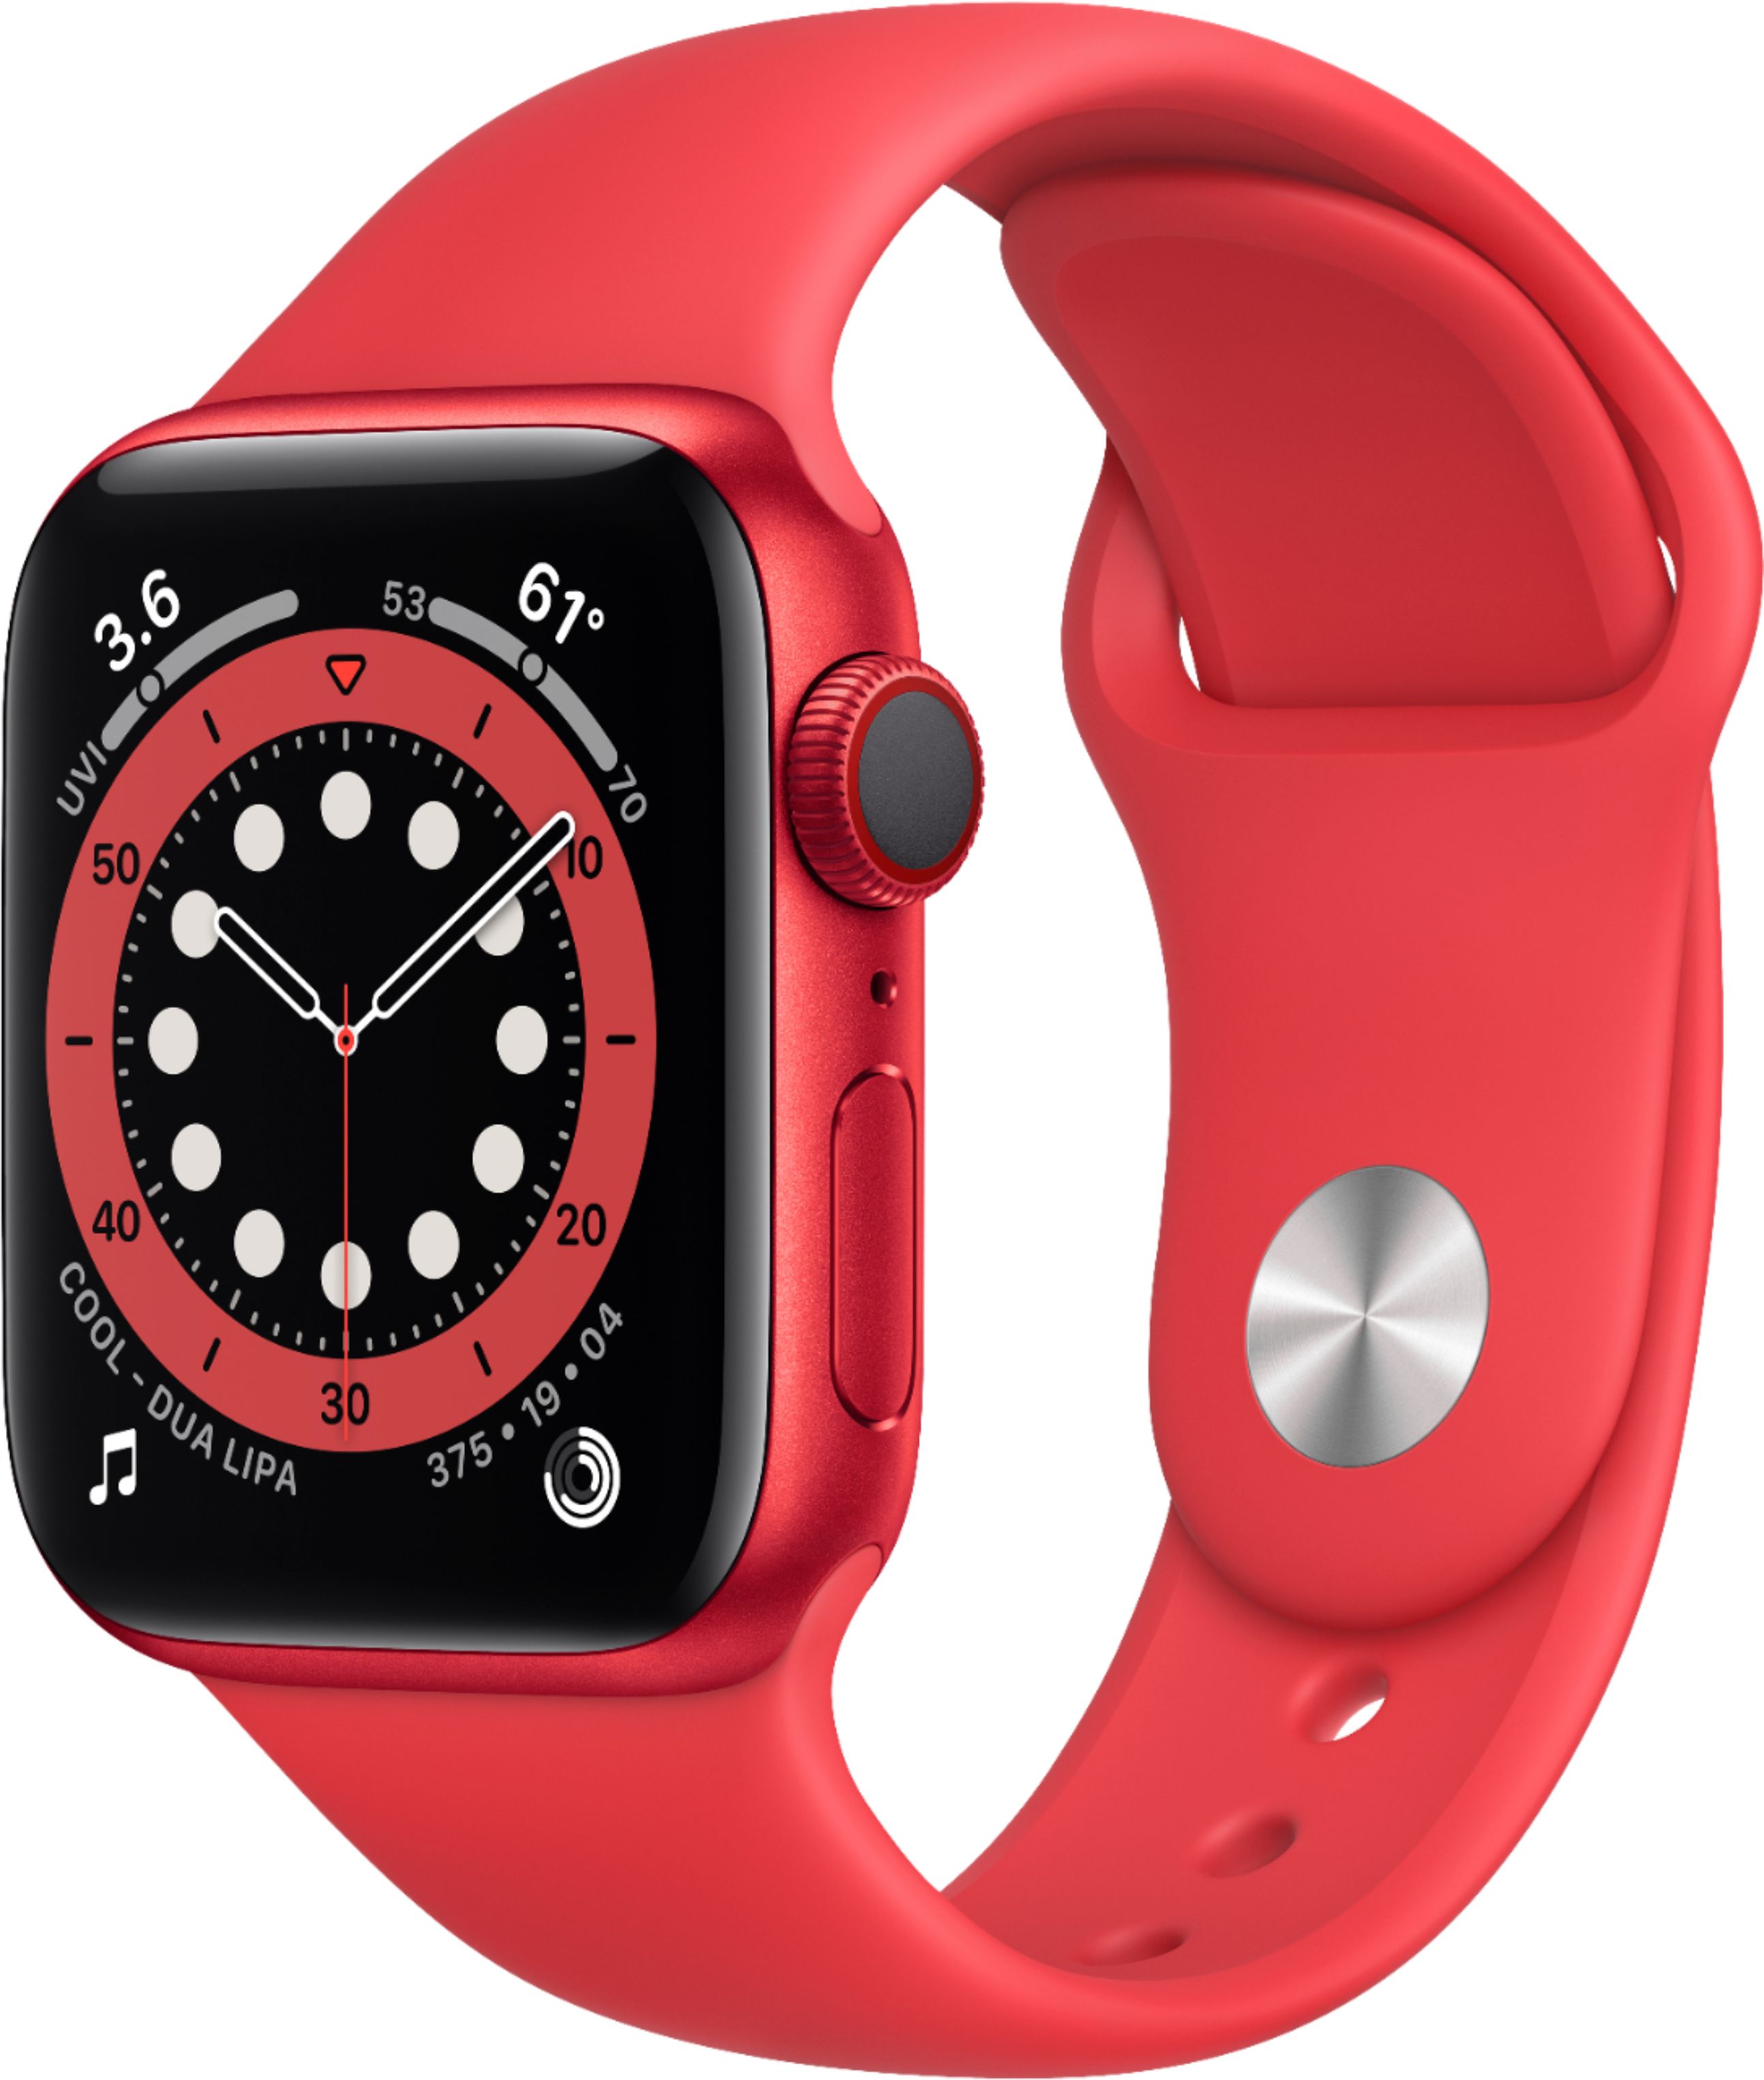 Apple Watch Series 6 (GPS + Cellular) 44mm Aluminum ... - Best Buy